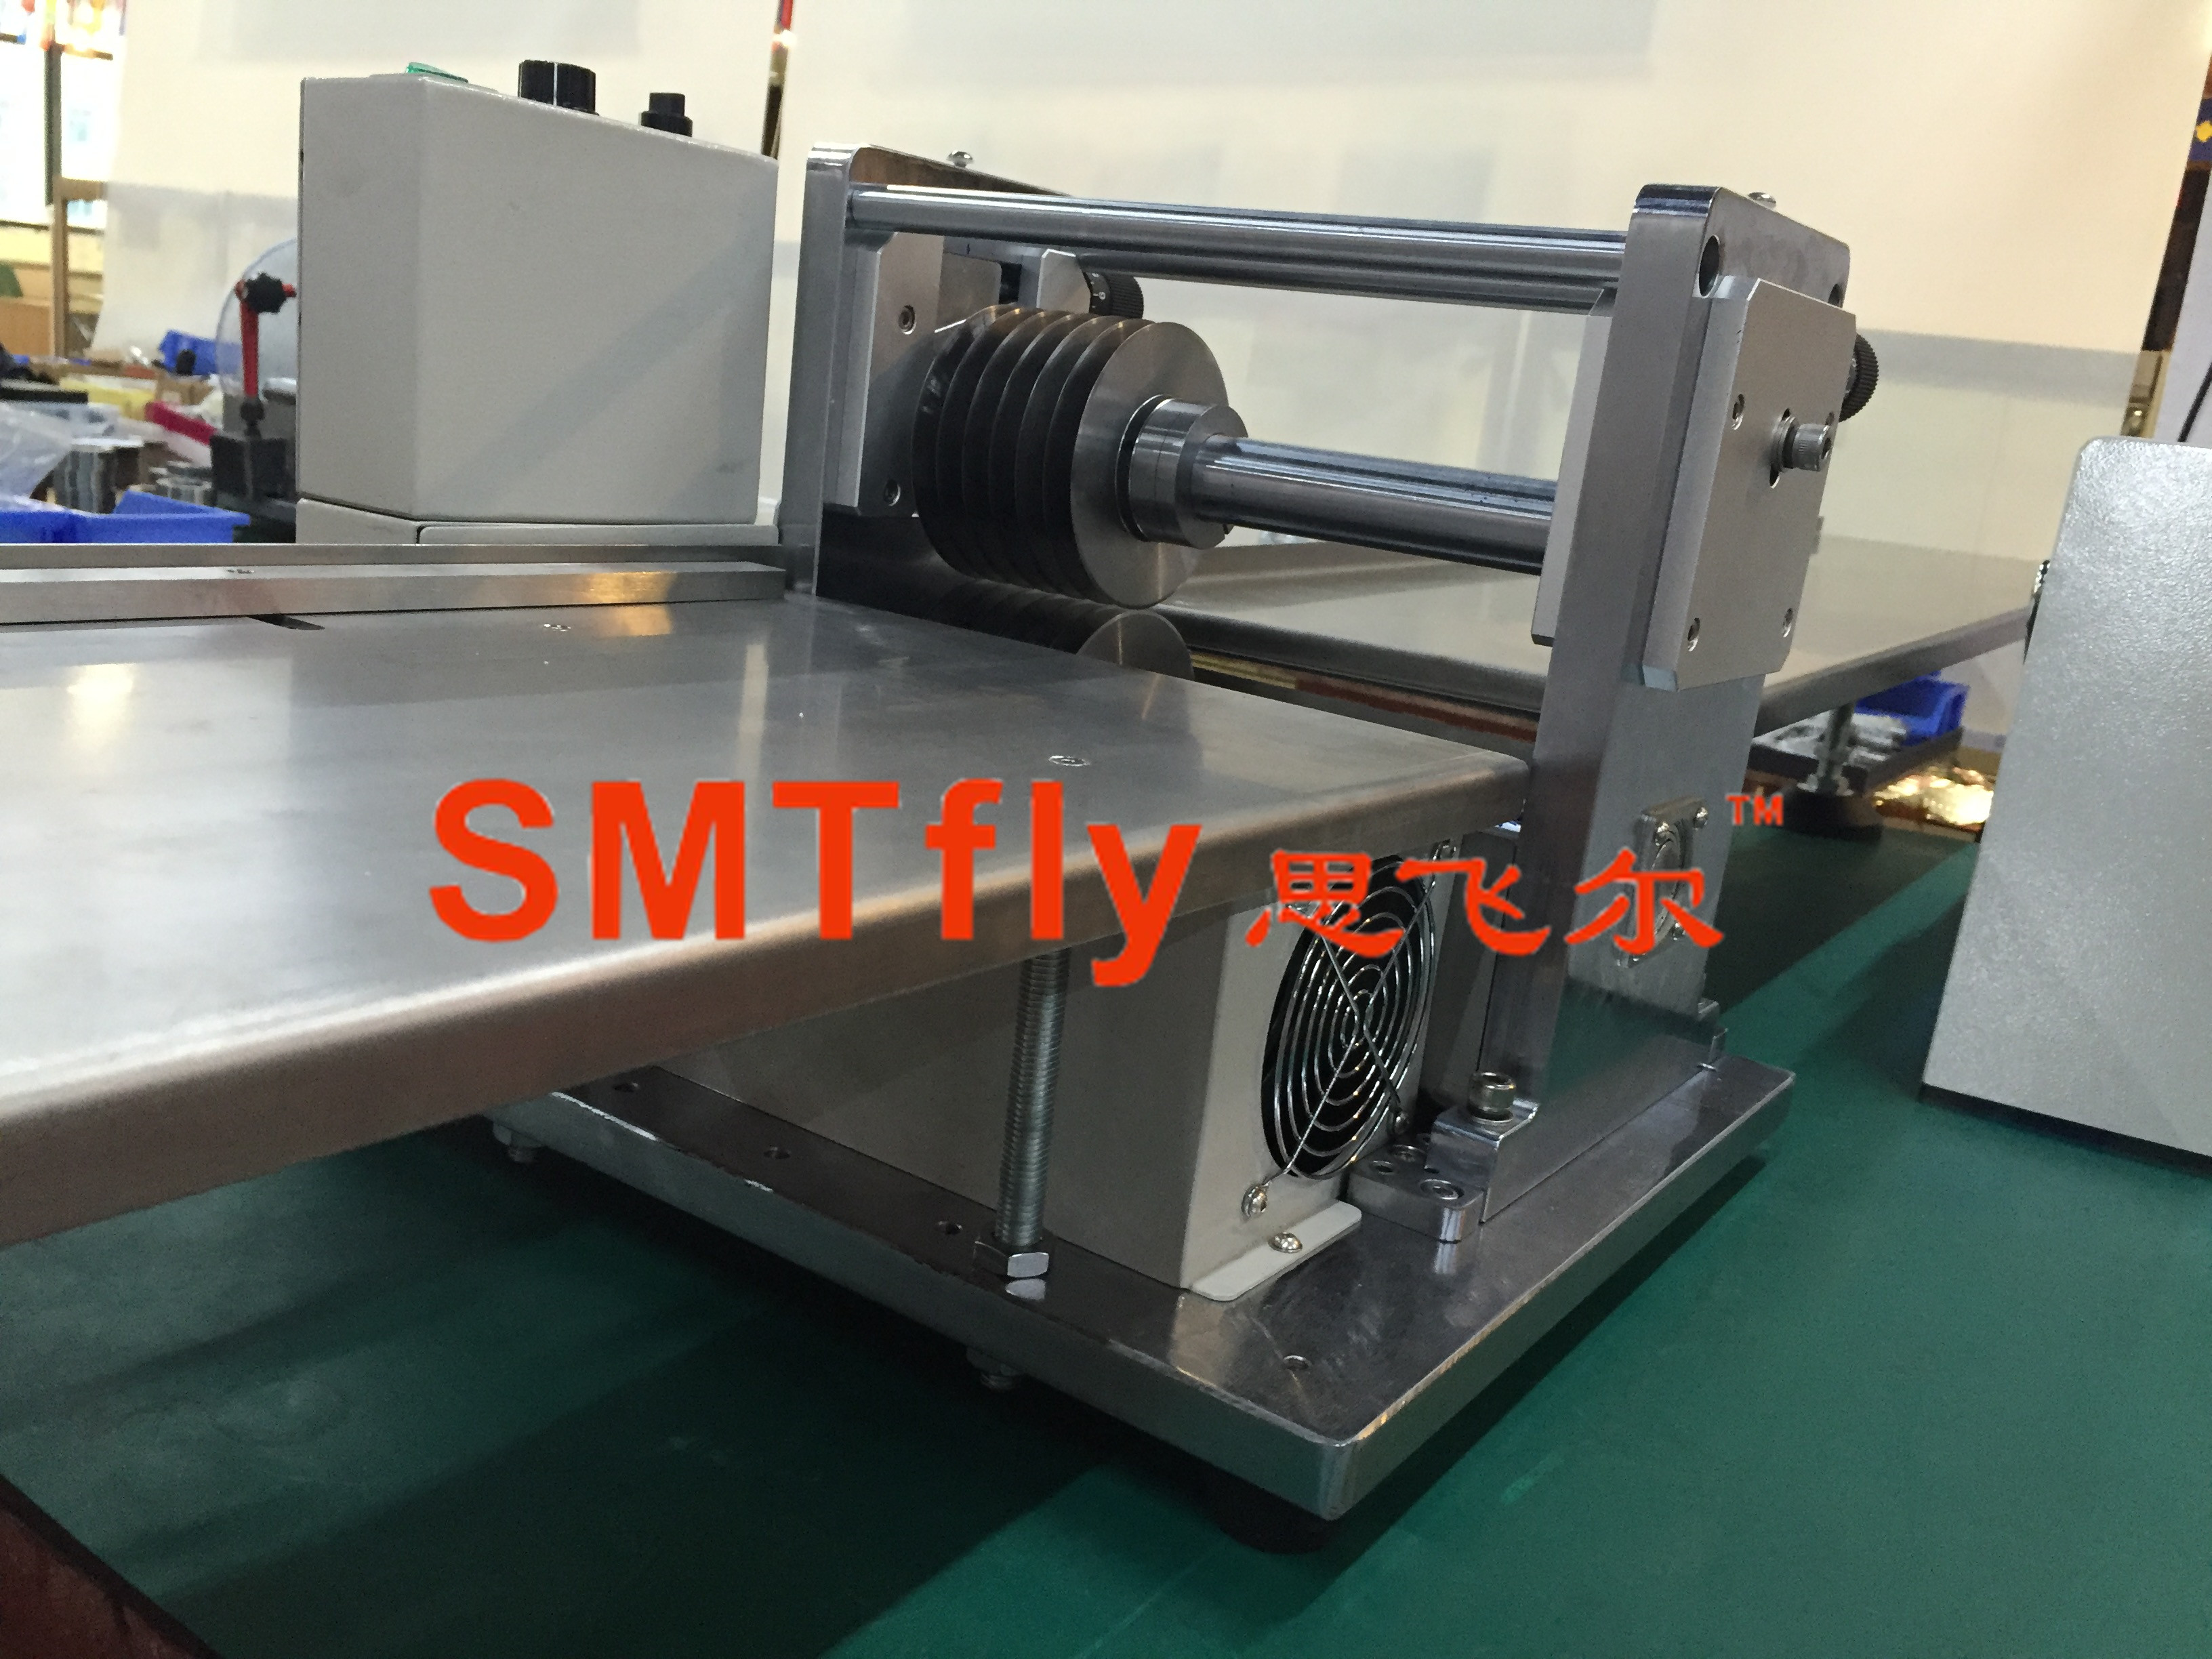 Circuit Board Separating Equipment,SMTfly-1SN